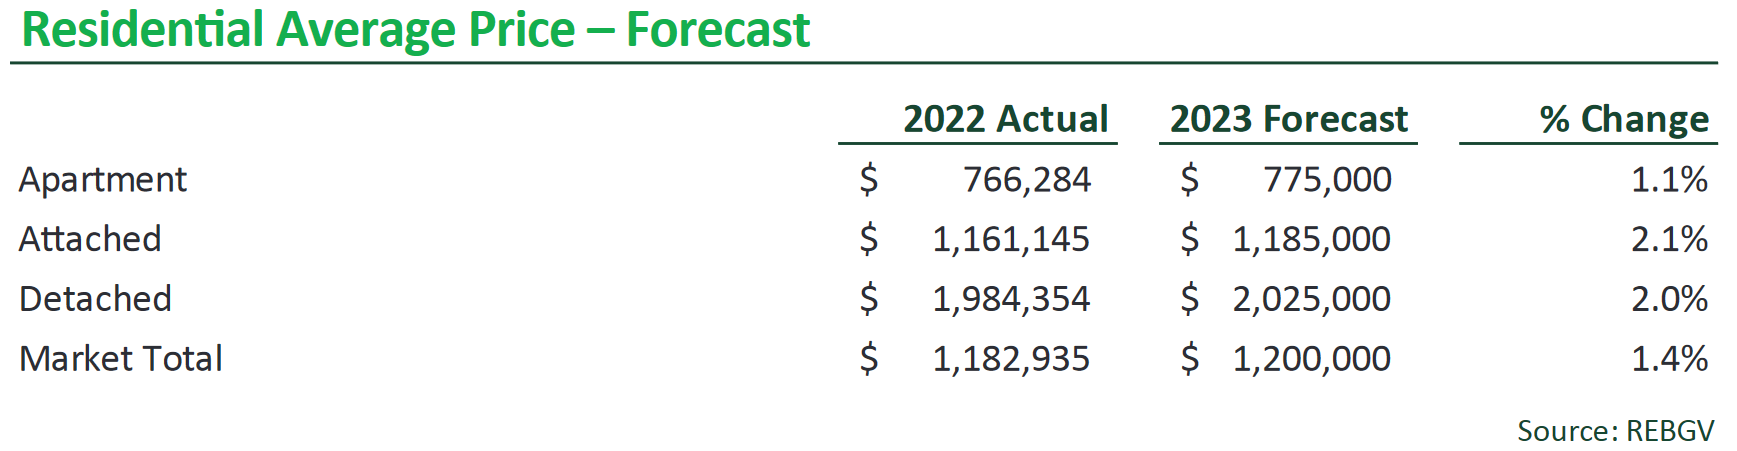 2023 average price forecast